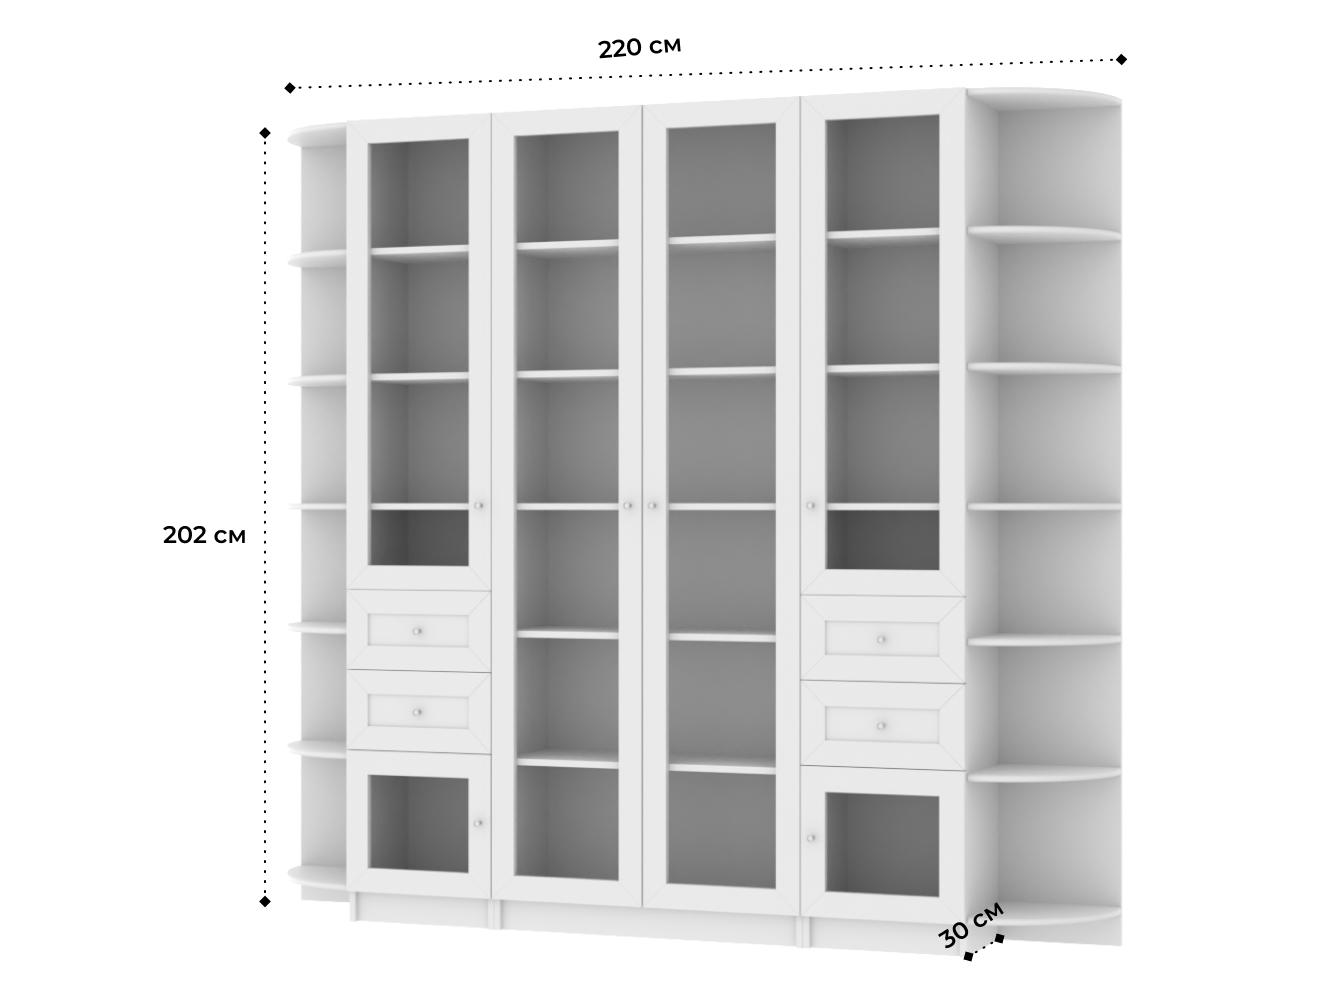  Книжный шкаф Билли 415 white ИКЕА (IKEA) изображение товара